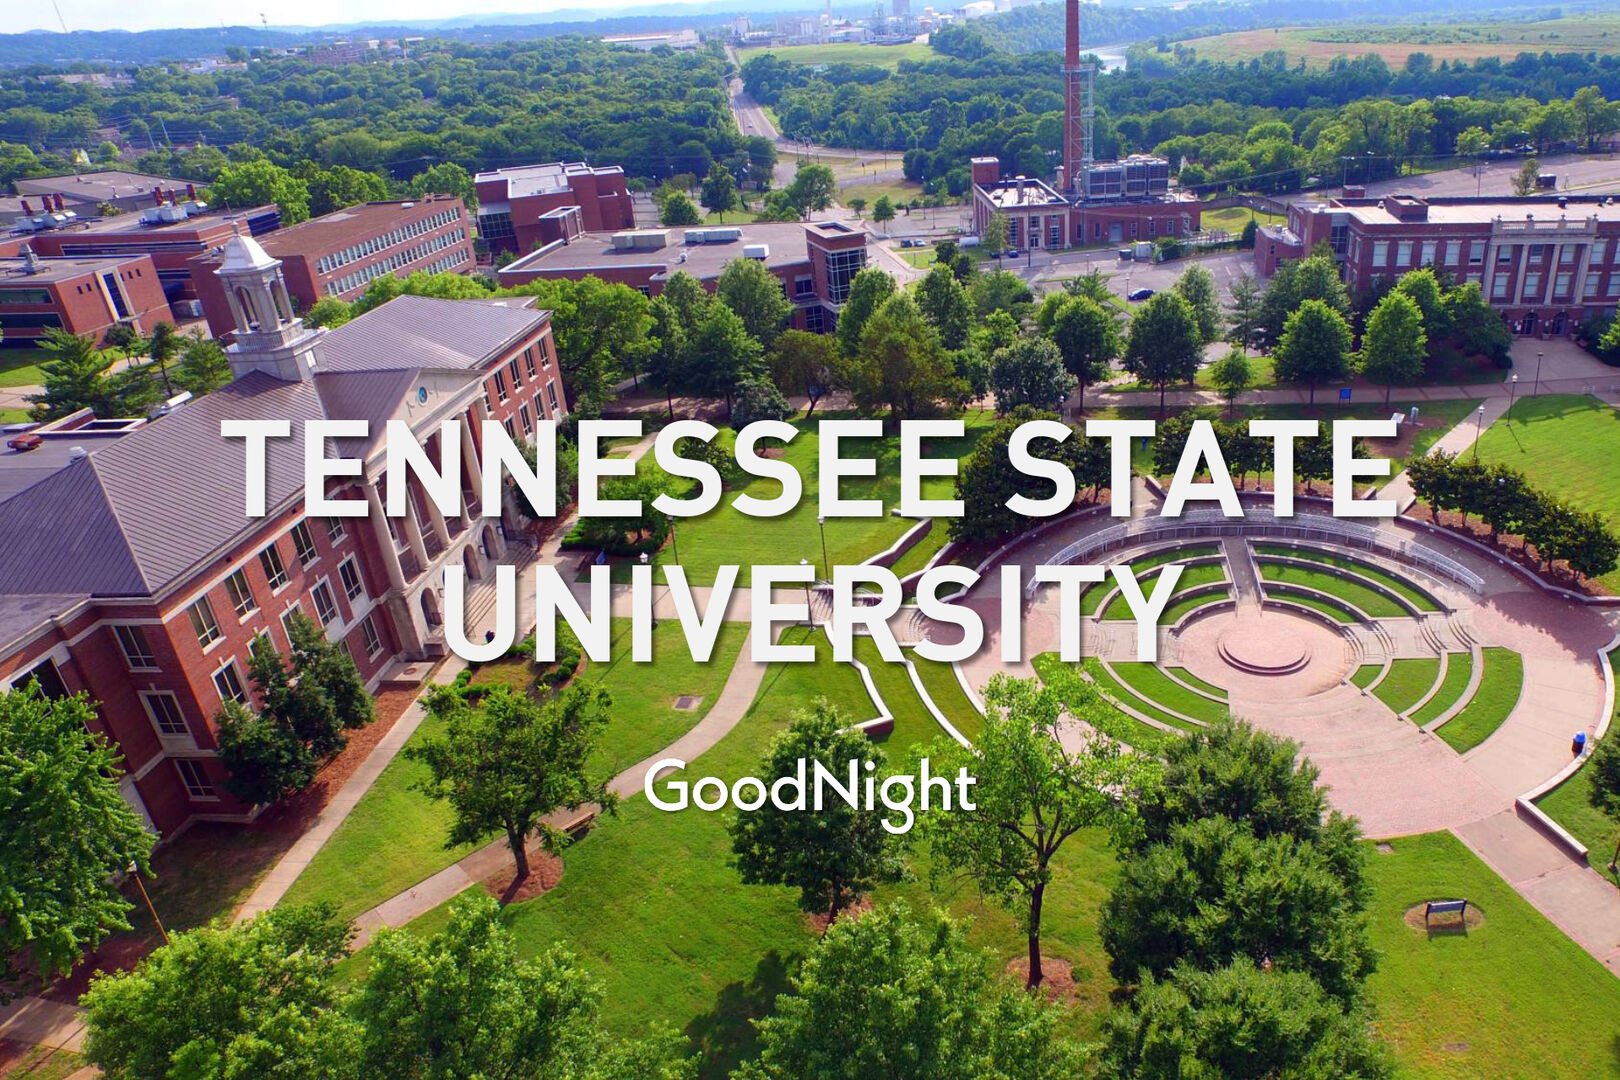 6 mins: Tennessee State University